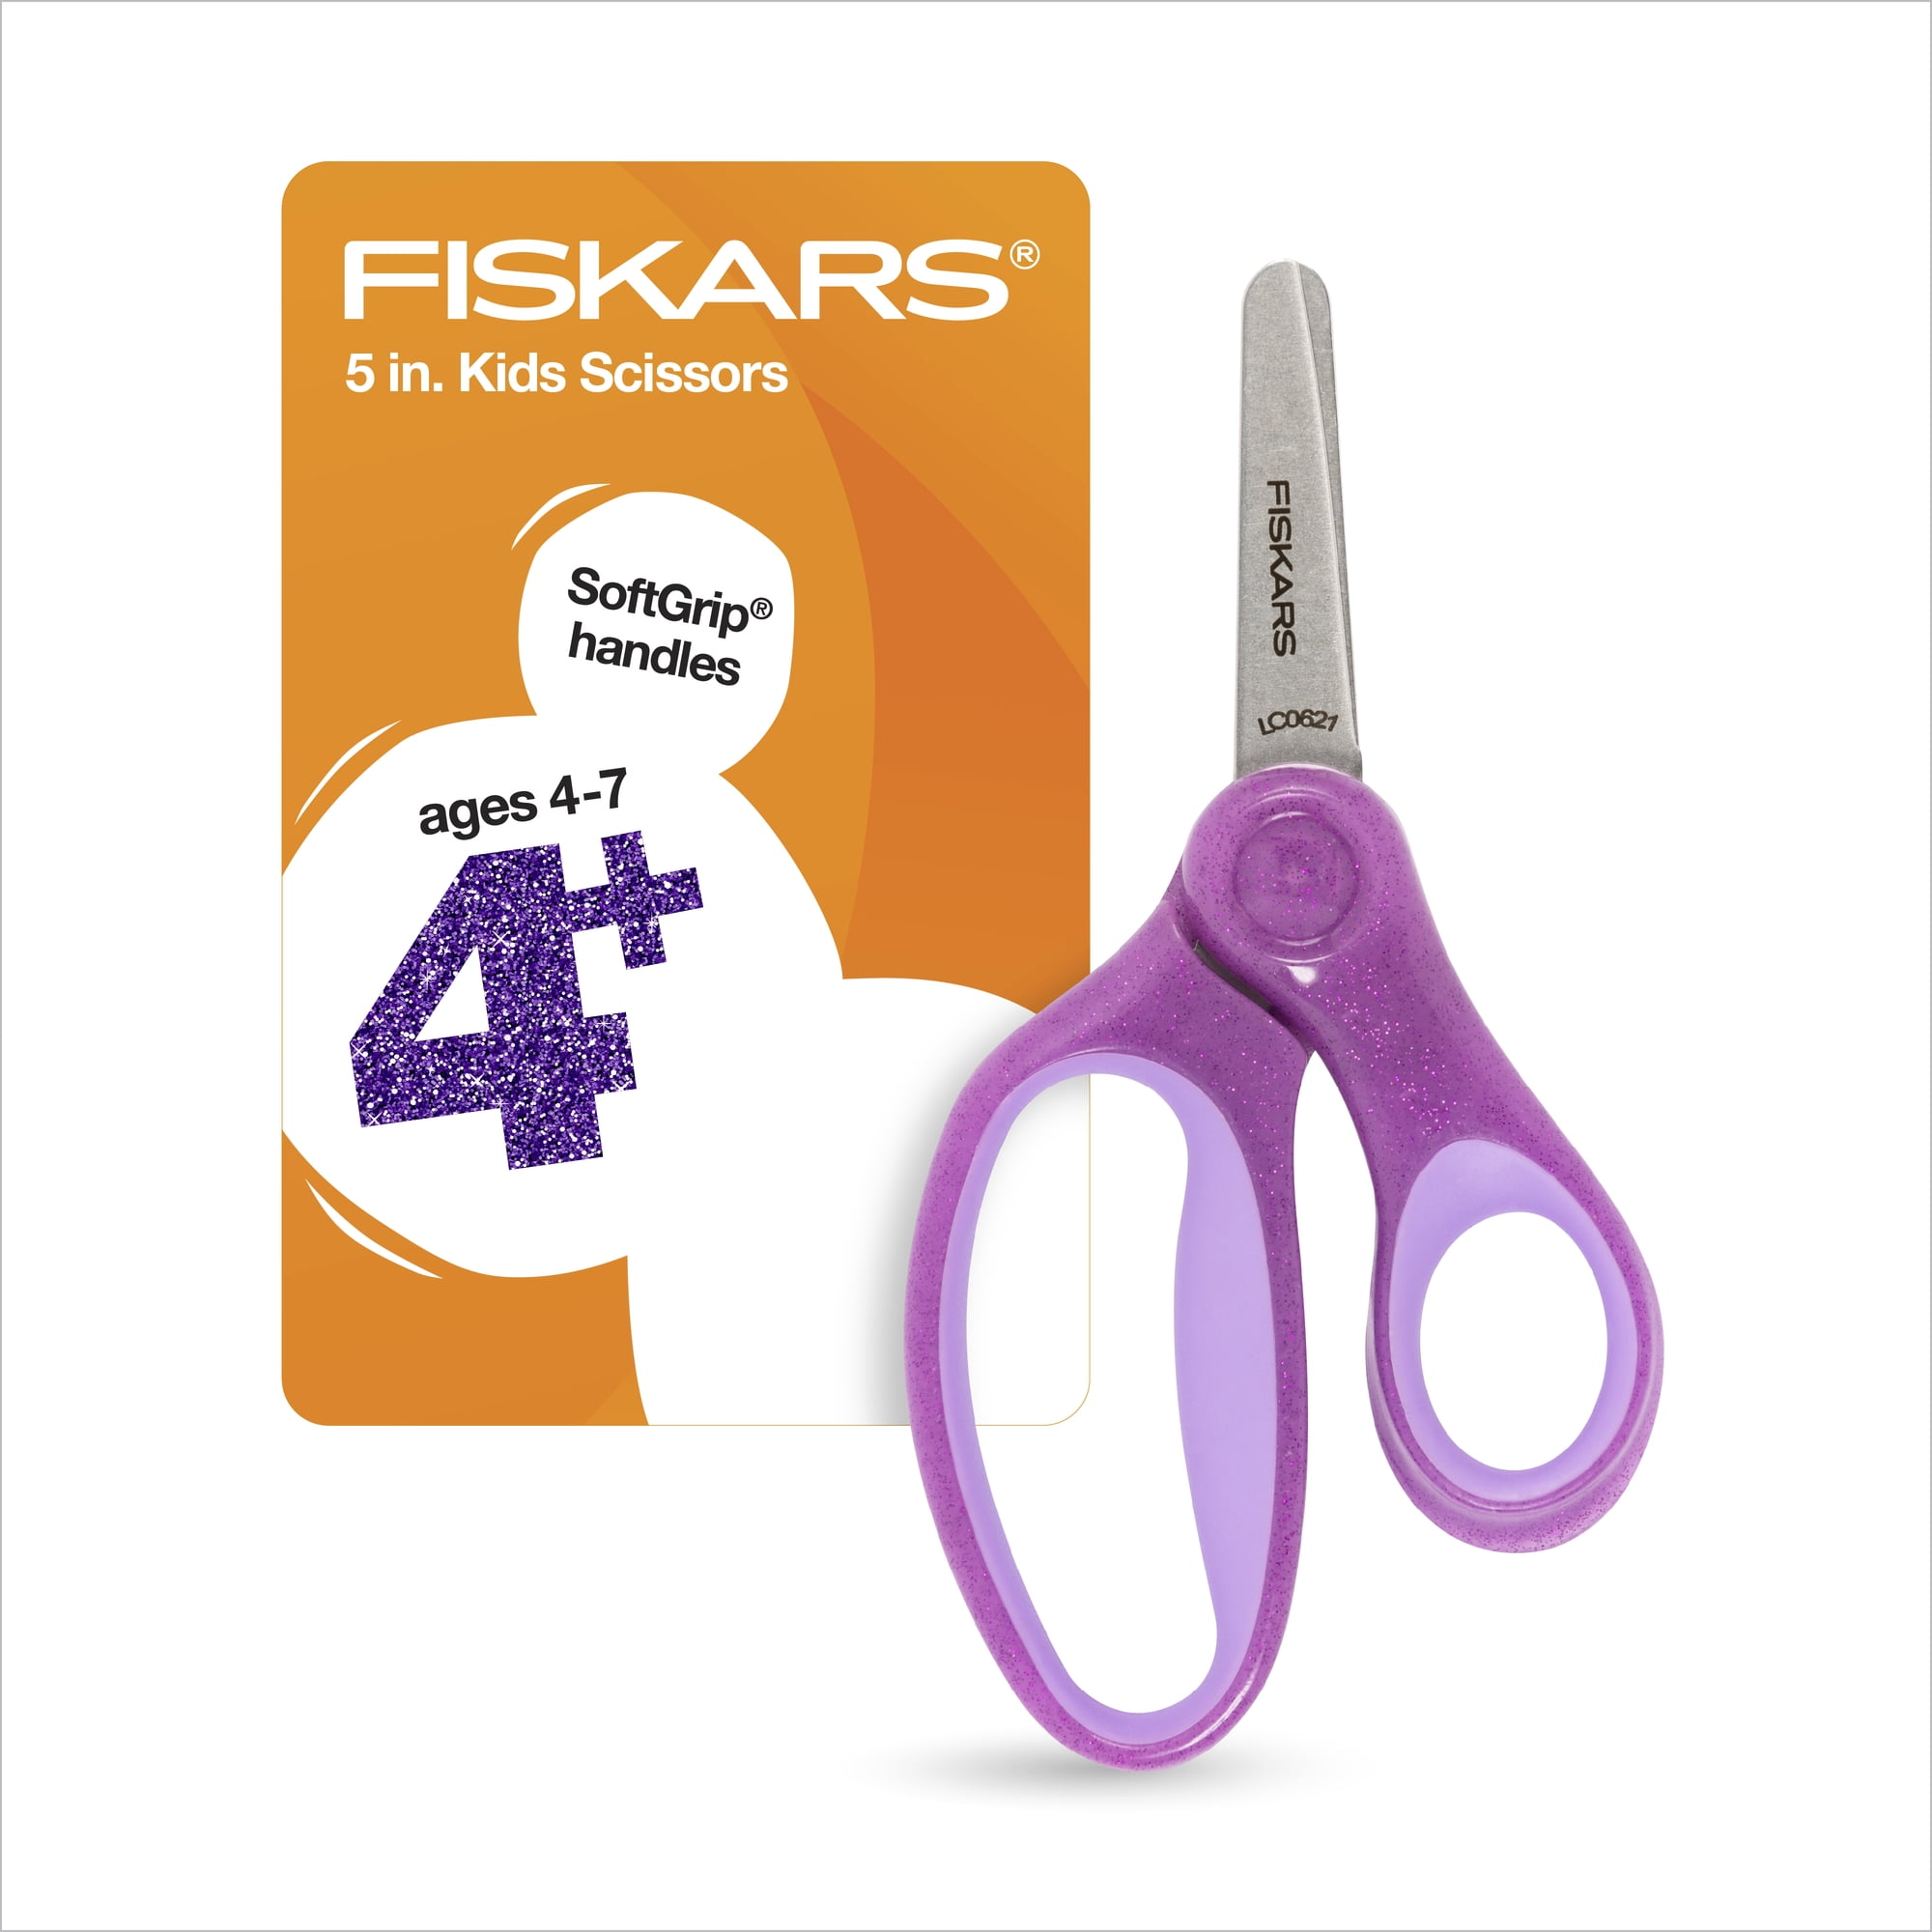 Acheter Pre-school scissors - Purple - Scissors - APLI - Le Nuage d